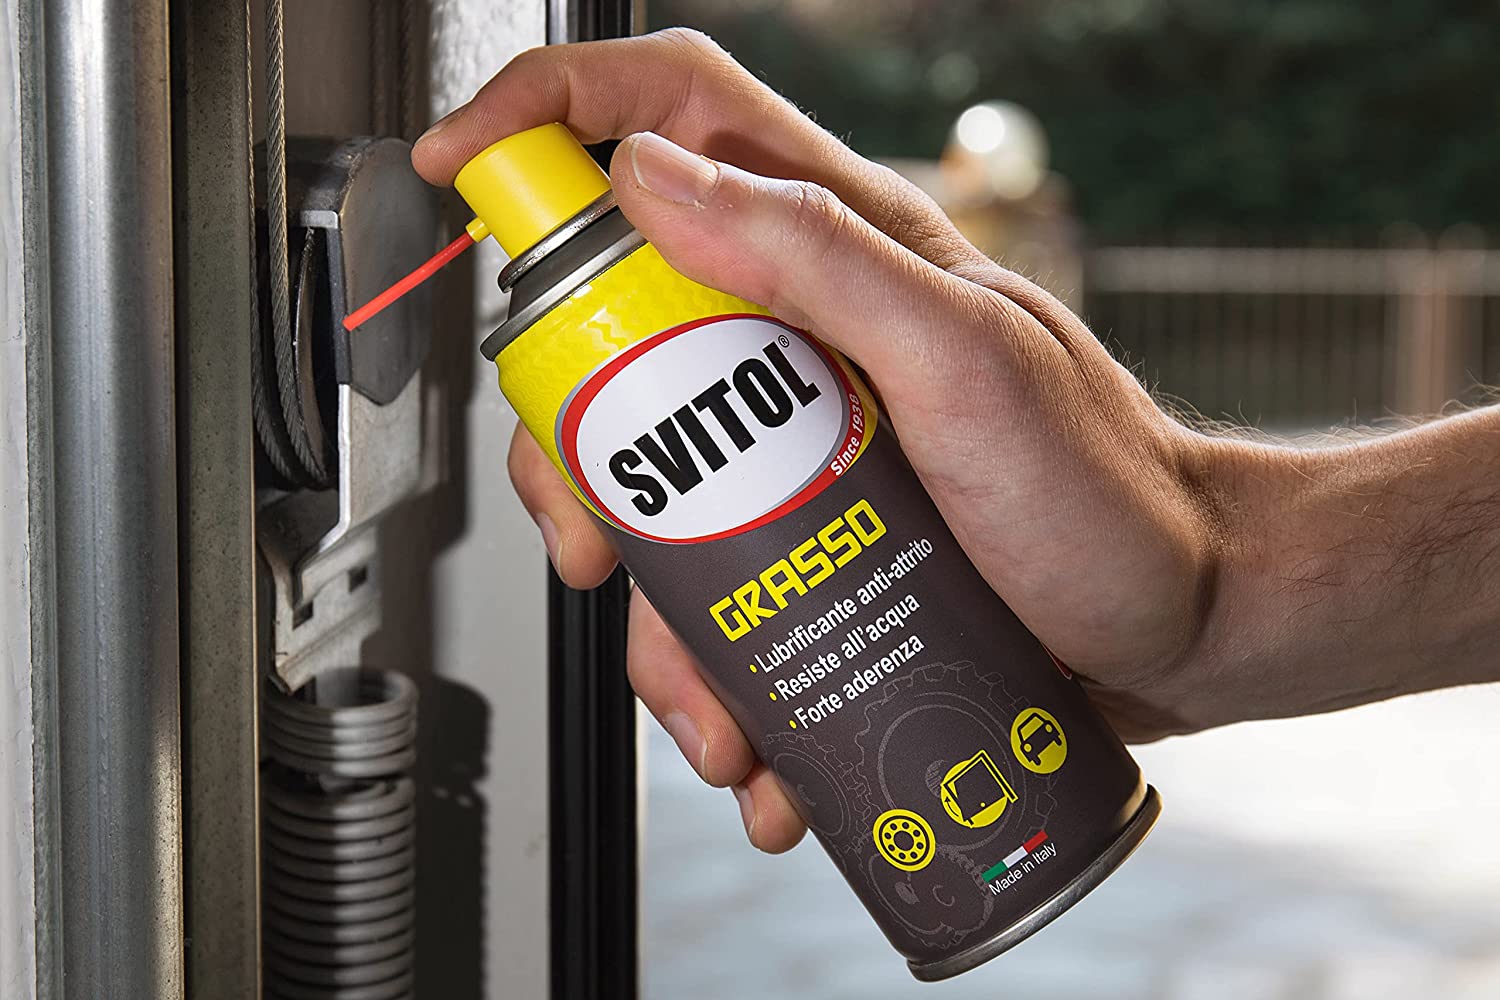 Svitol Easy Grasso lubrificante spray 200ml - Cod. 2323 - ToolShop Italia